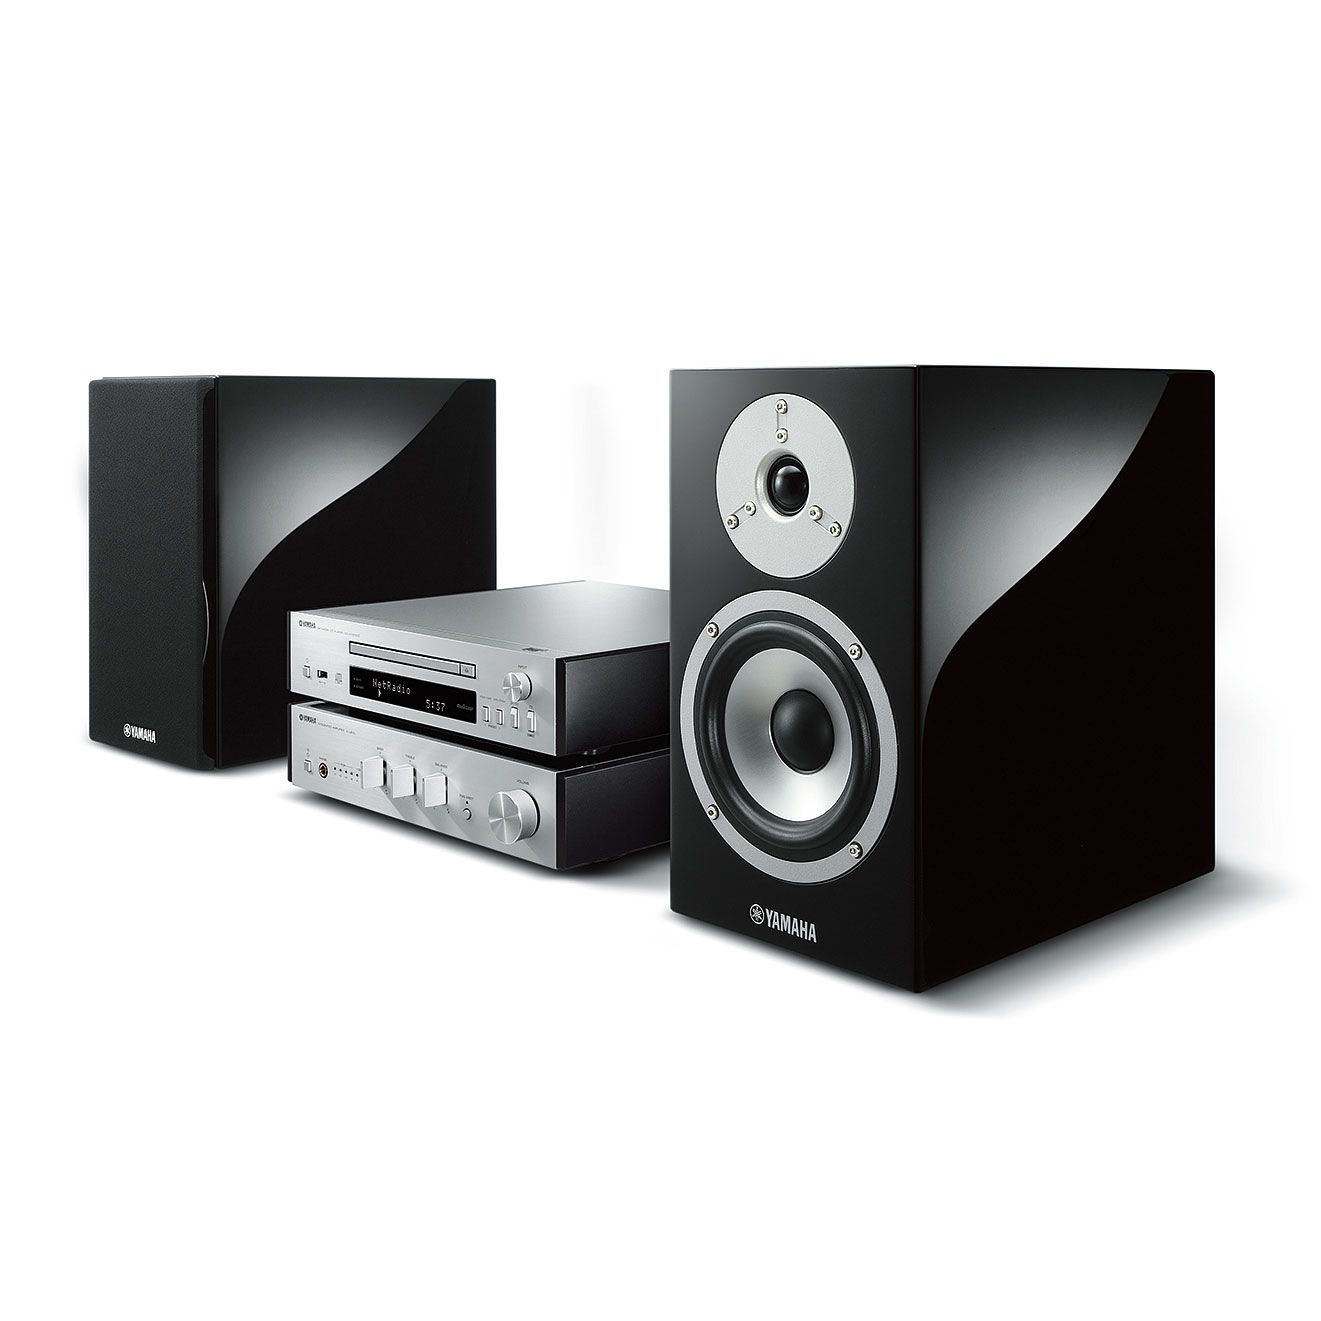 MusicCast MCR-N870D - Panoramica - Sistemi HiFi - Audio & Video ...